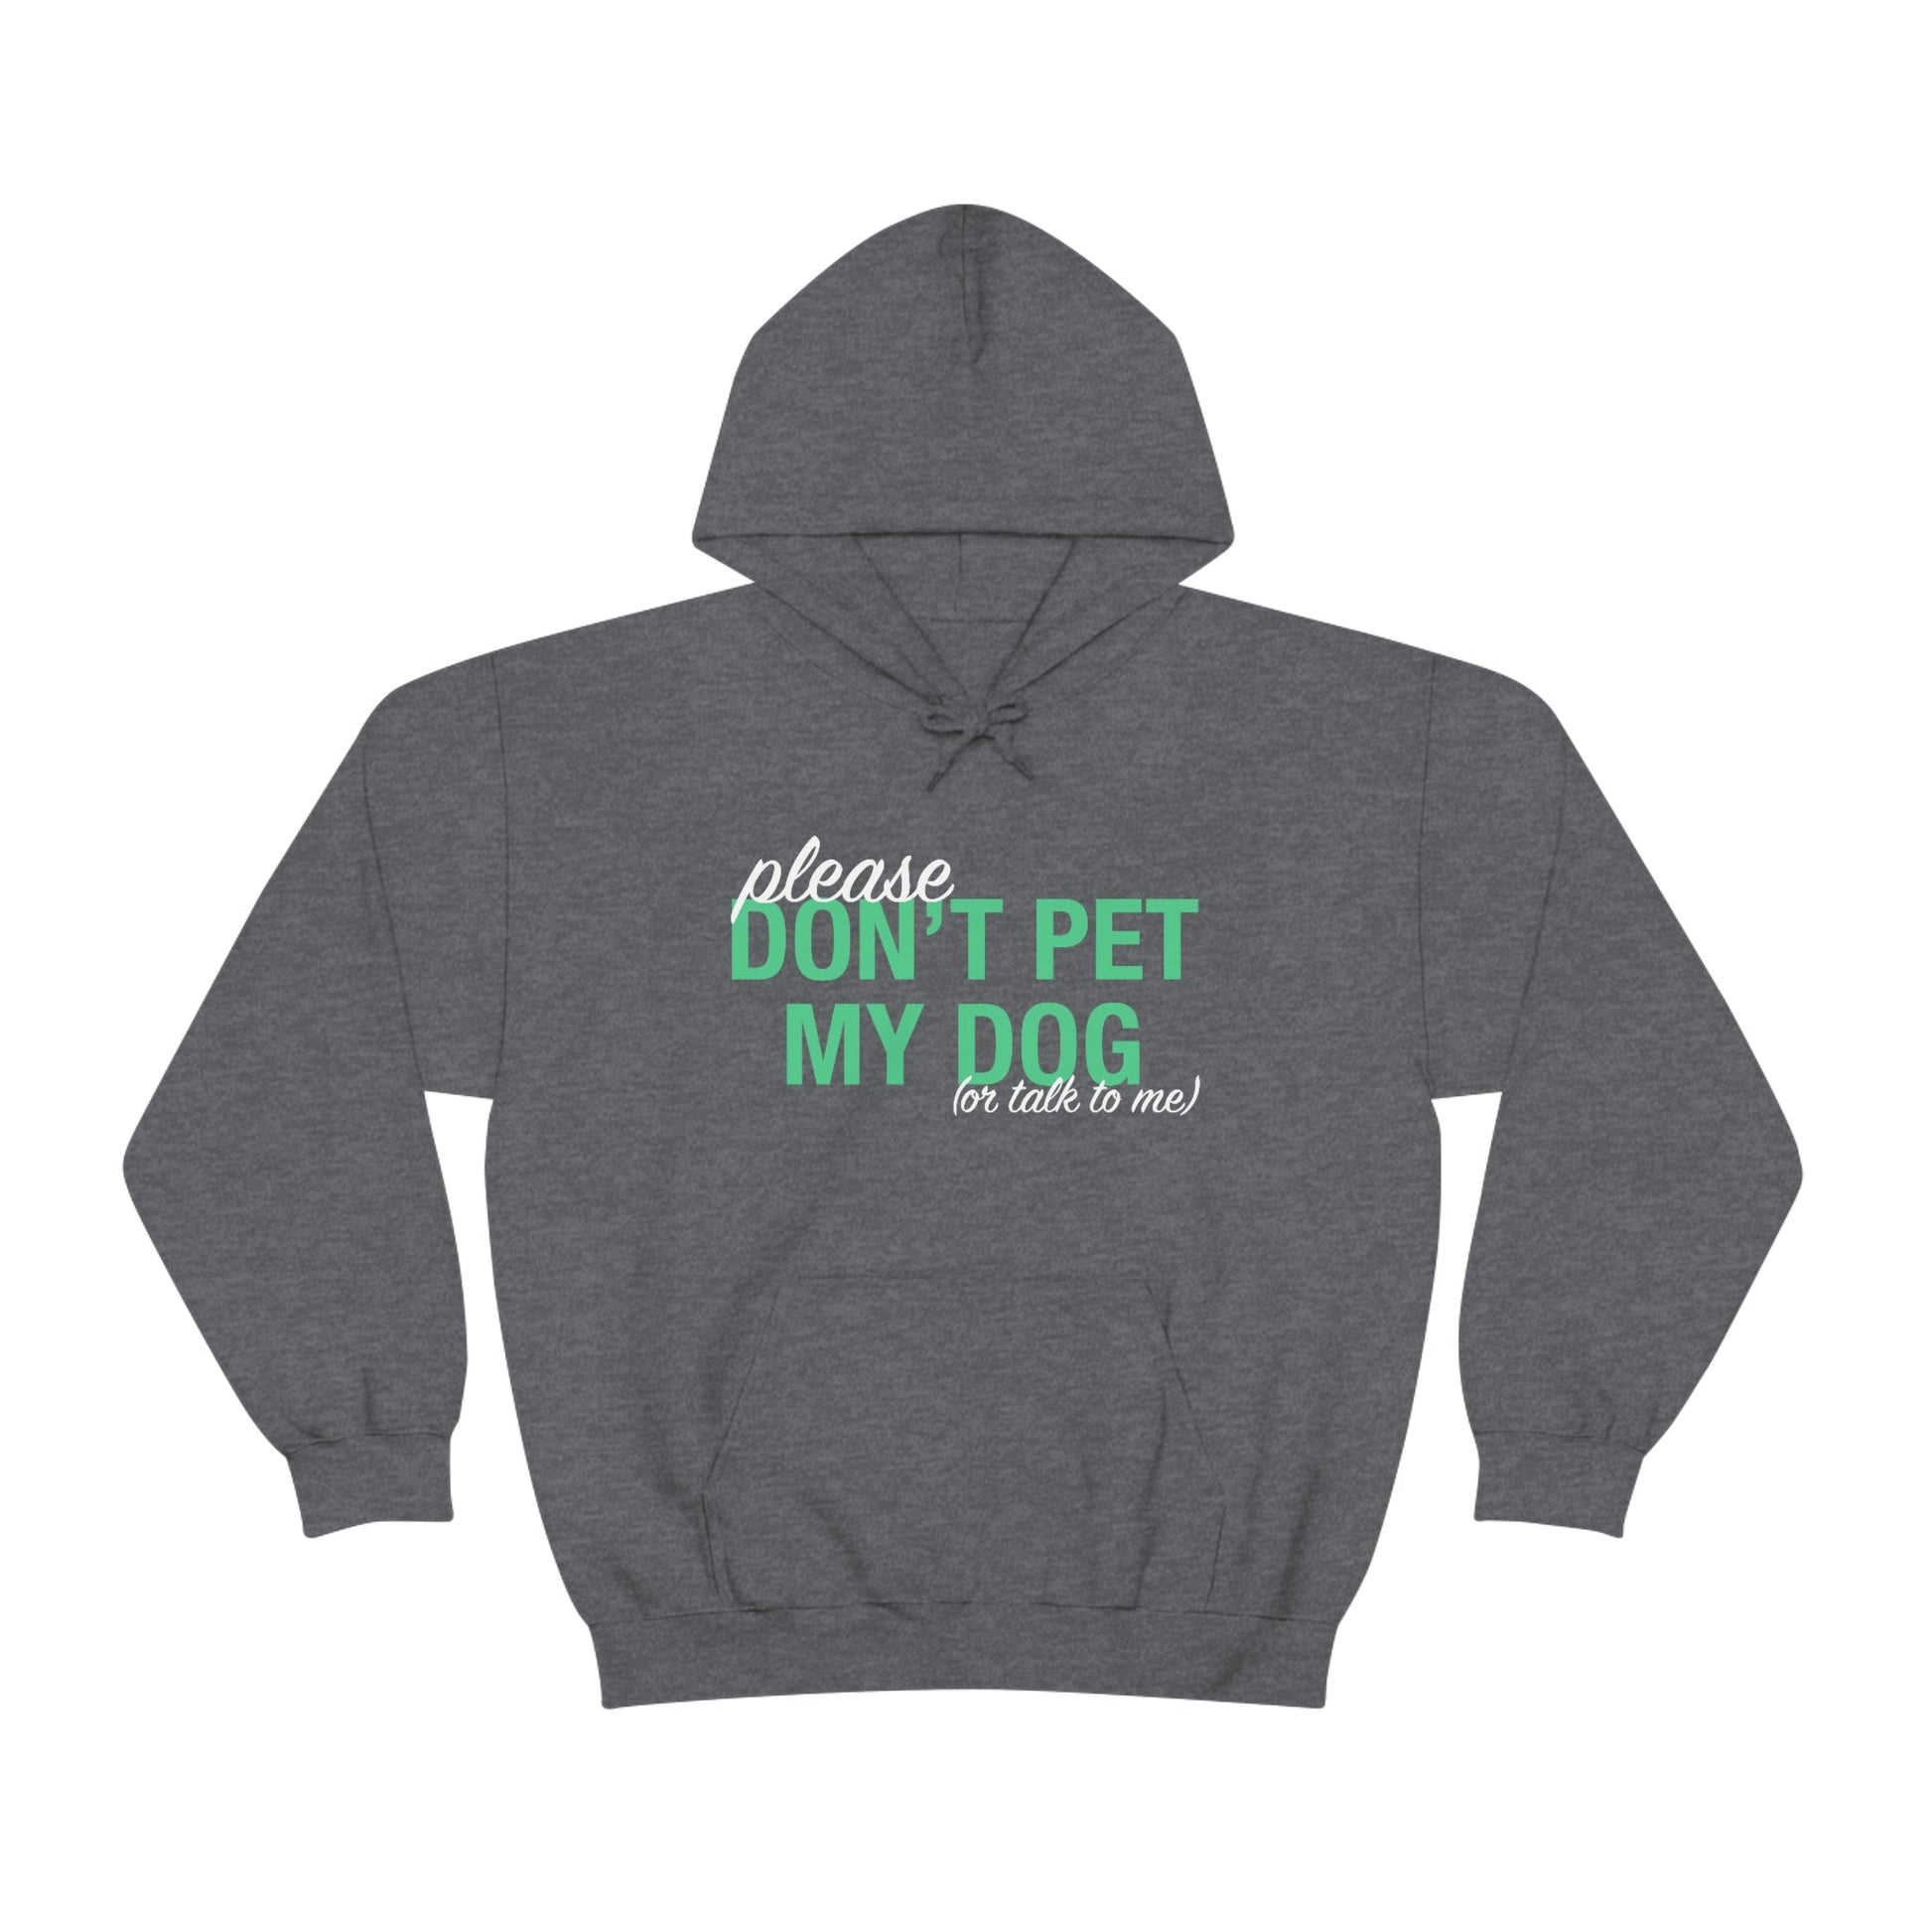 Please Don't Pet My Dog (Or Talk To Me) | Hooded Sweatshirt - Detezi Designs-17223838252497709789